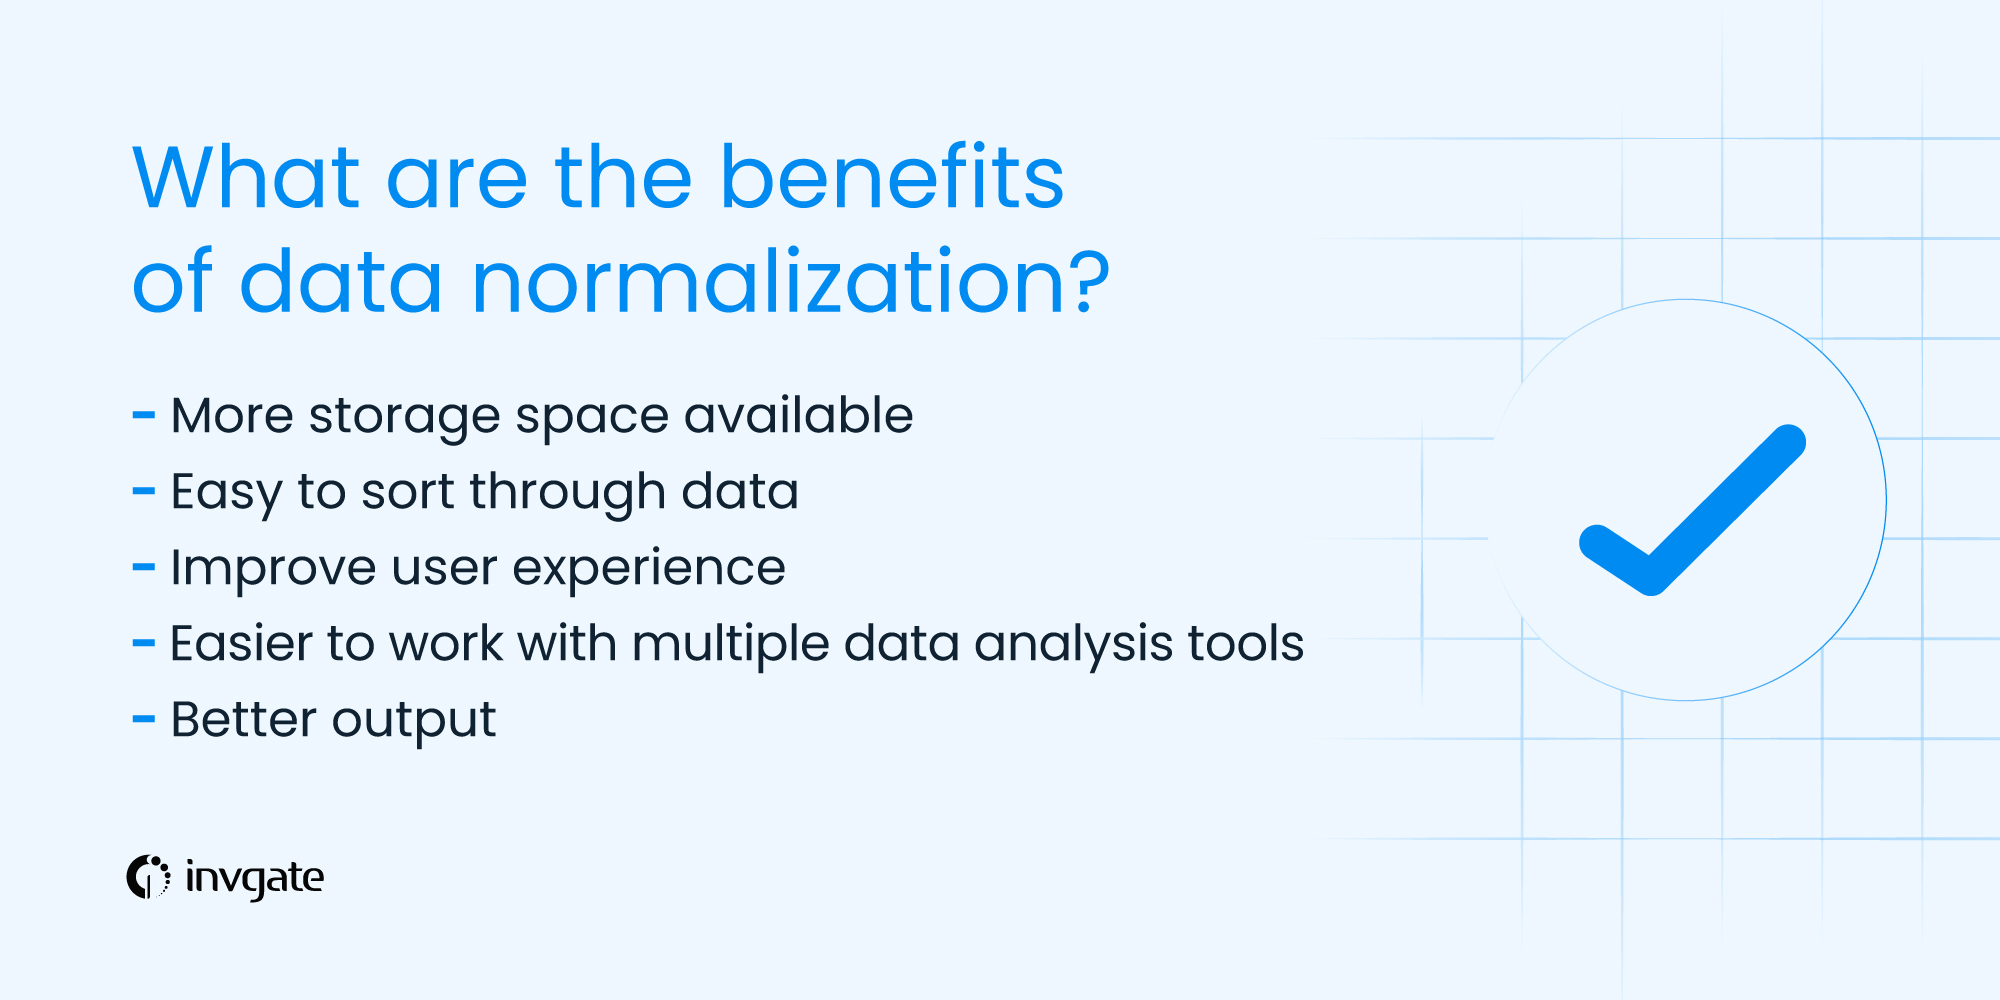 Data normalization has many benefits